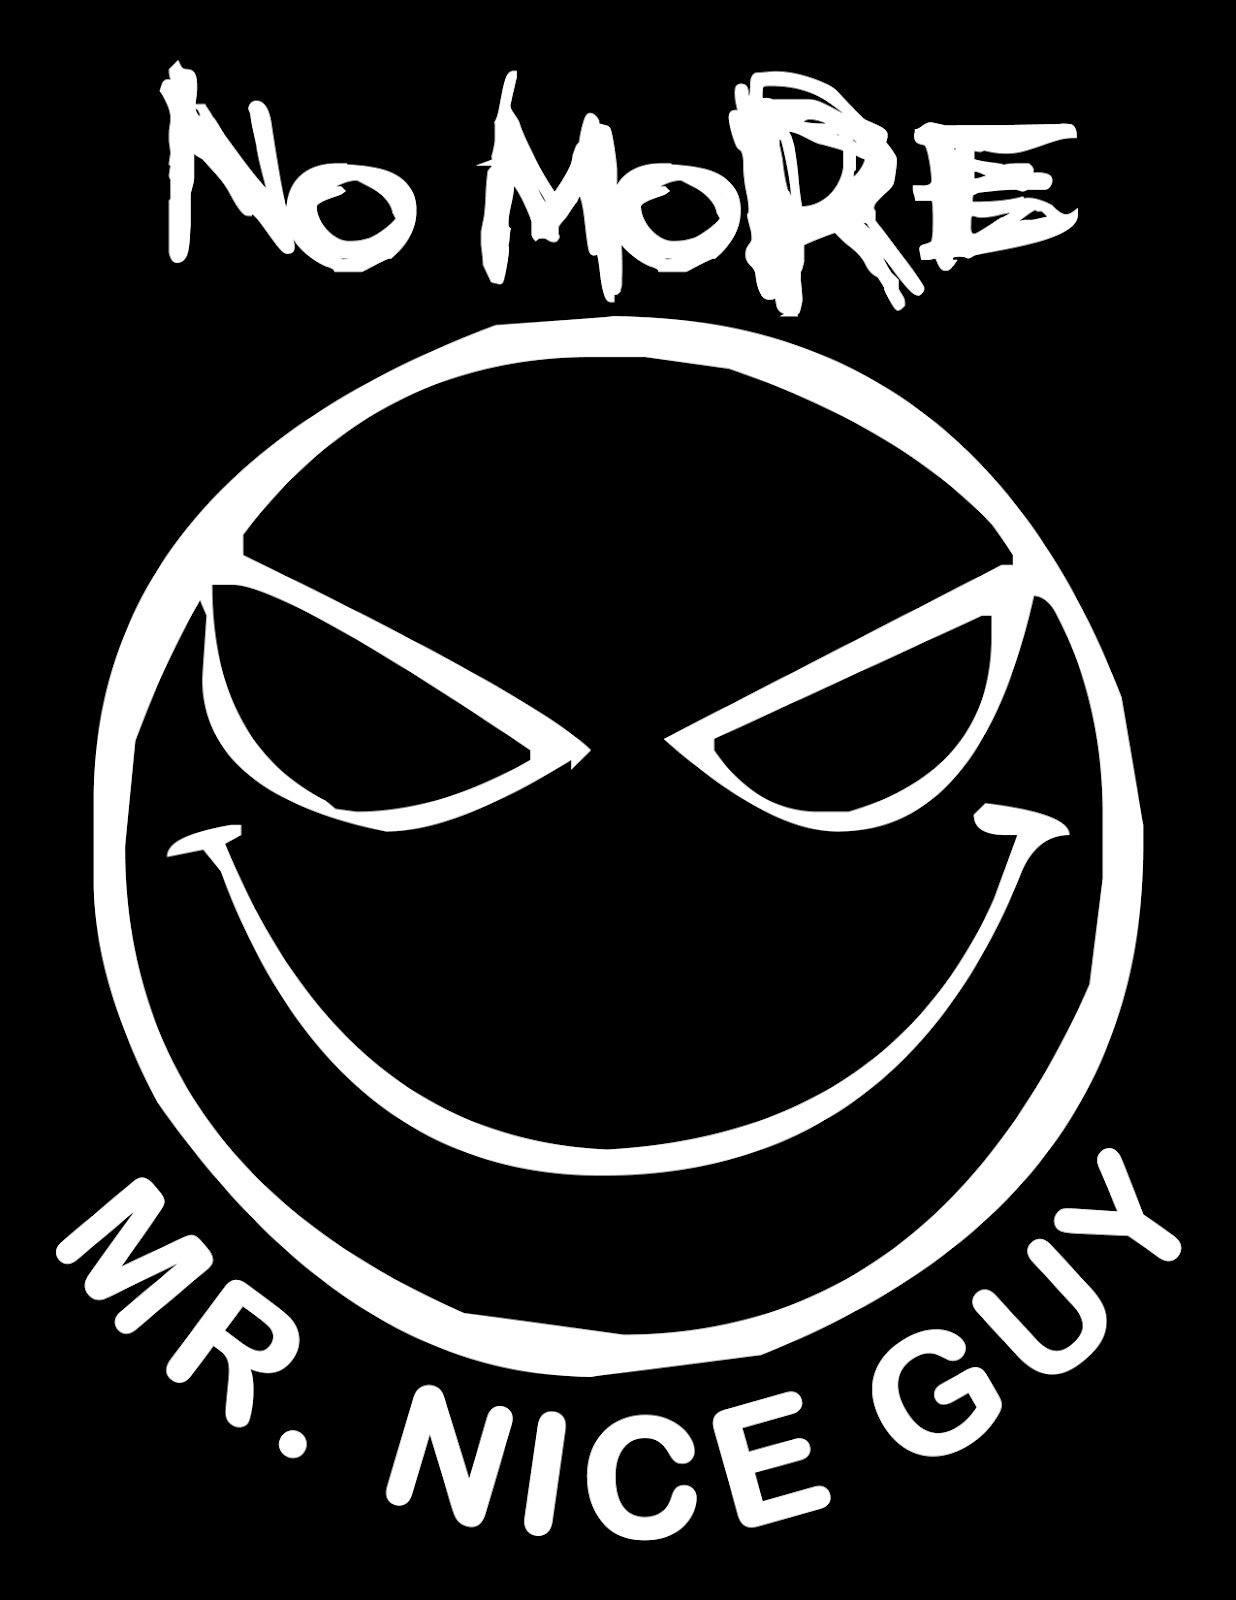 http://4.bp.blogspot.com/-NdFYIgZNb0E/T7VG4PIanTI/AAAAAAAAD-o/KCL_-8emxQI/s1600/No+More+Mr-1.+Nice+Guy+-+logo.jpg